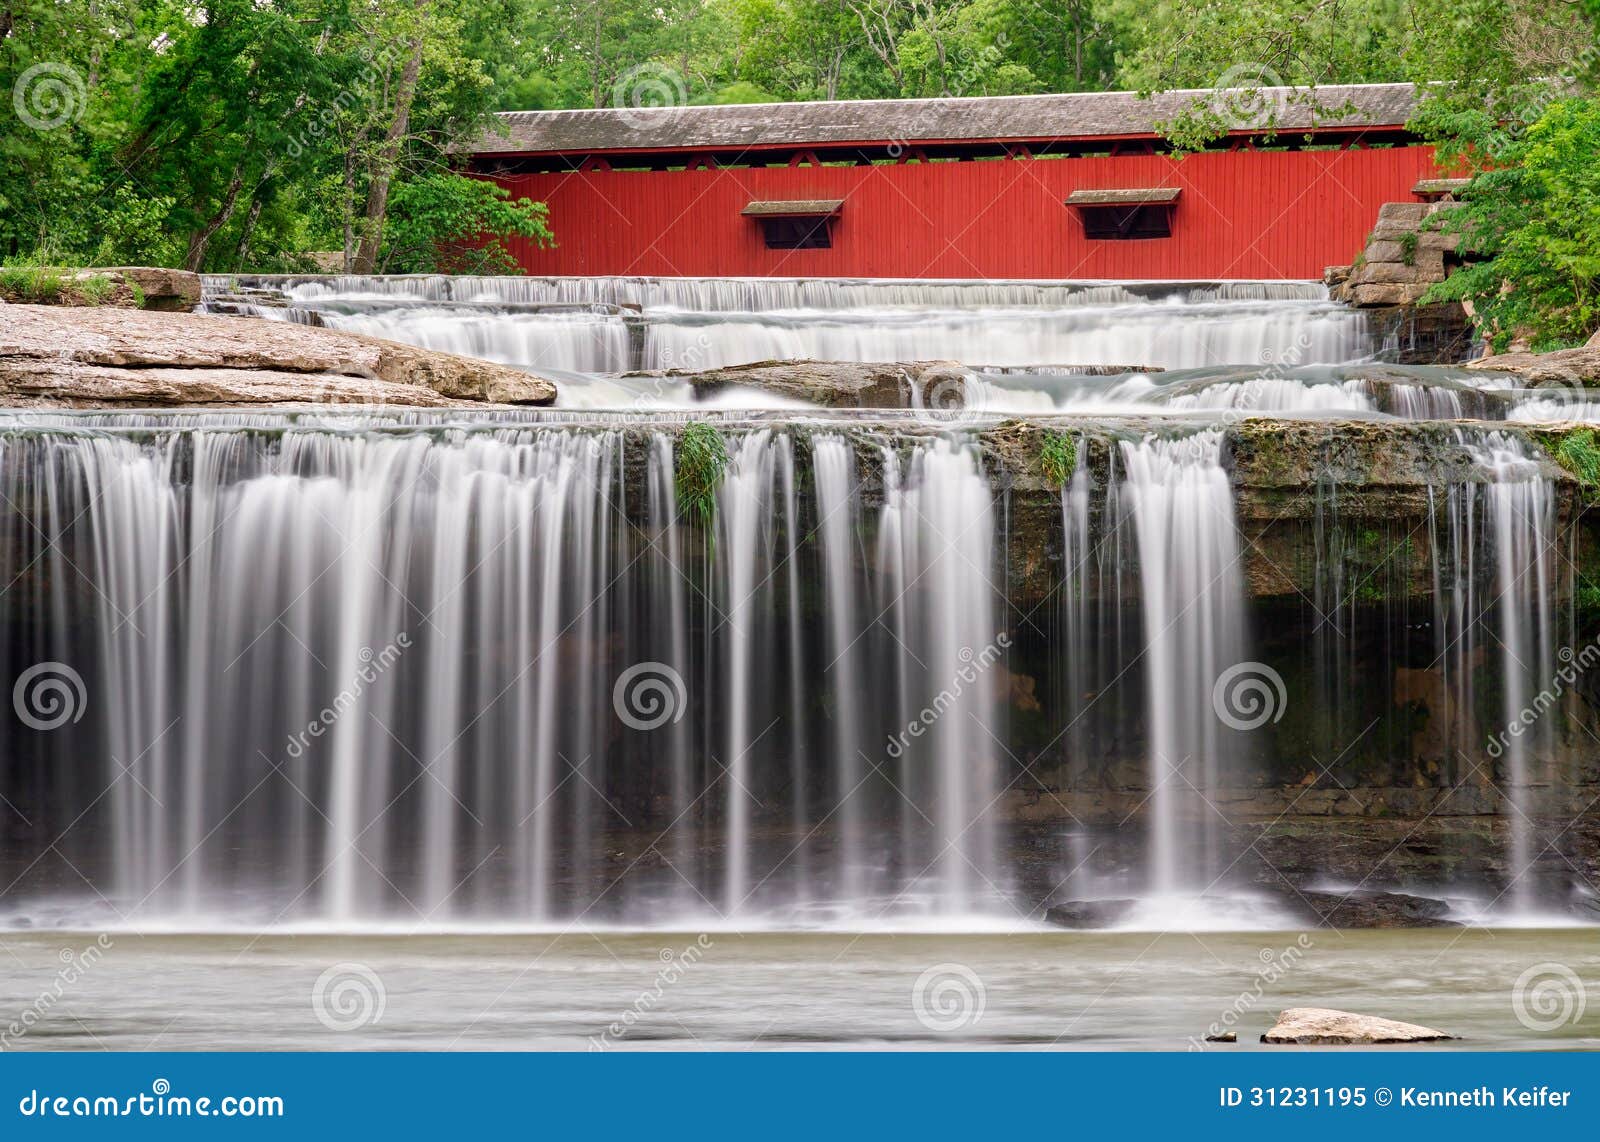 waterfall and covered bridge